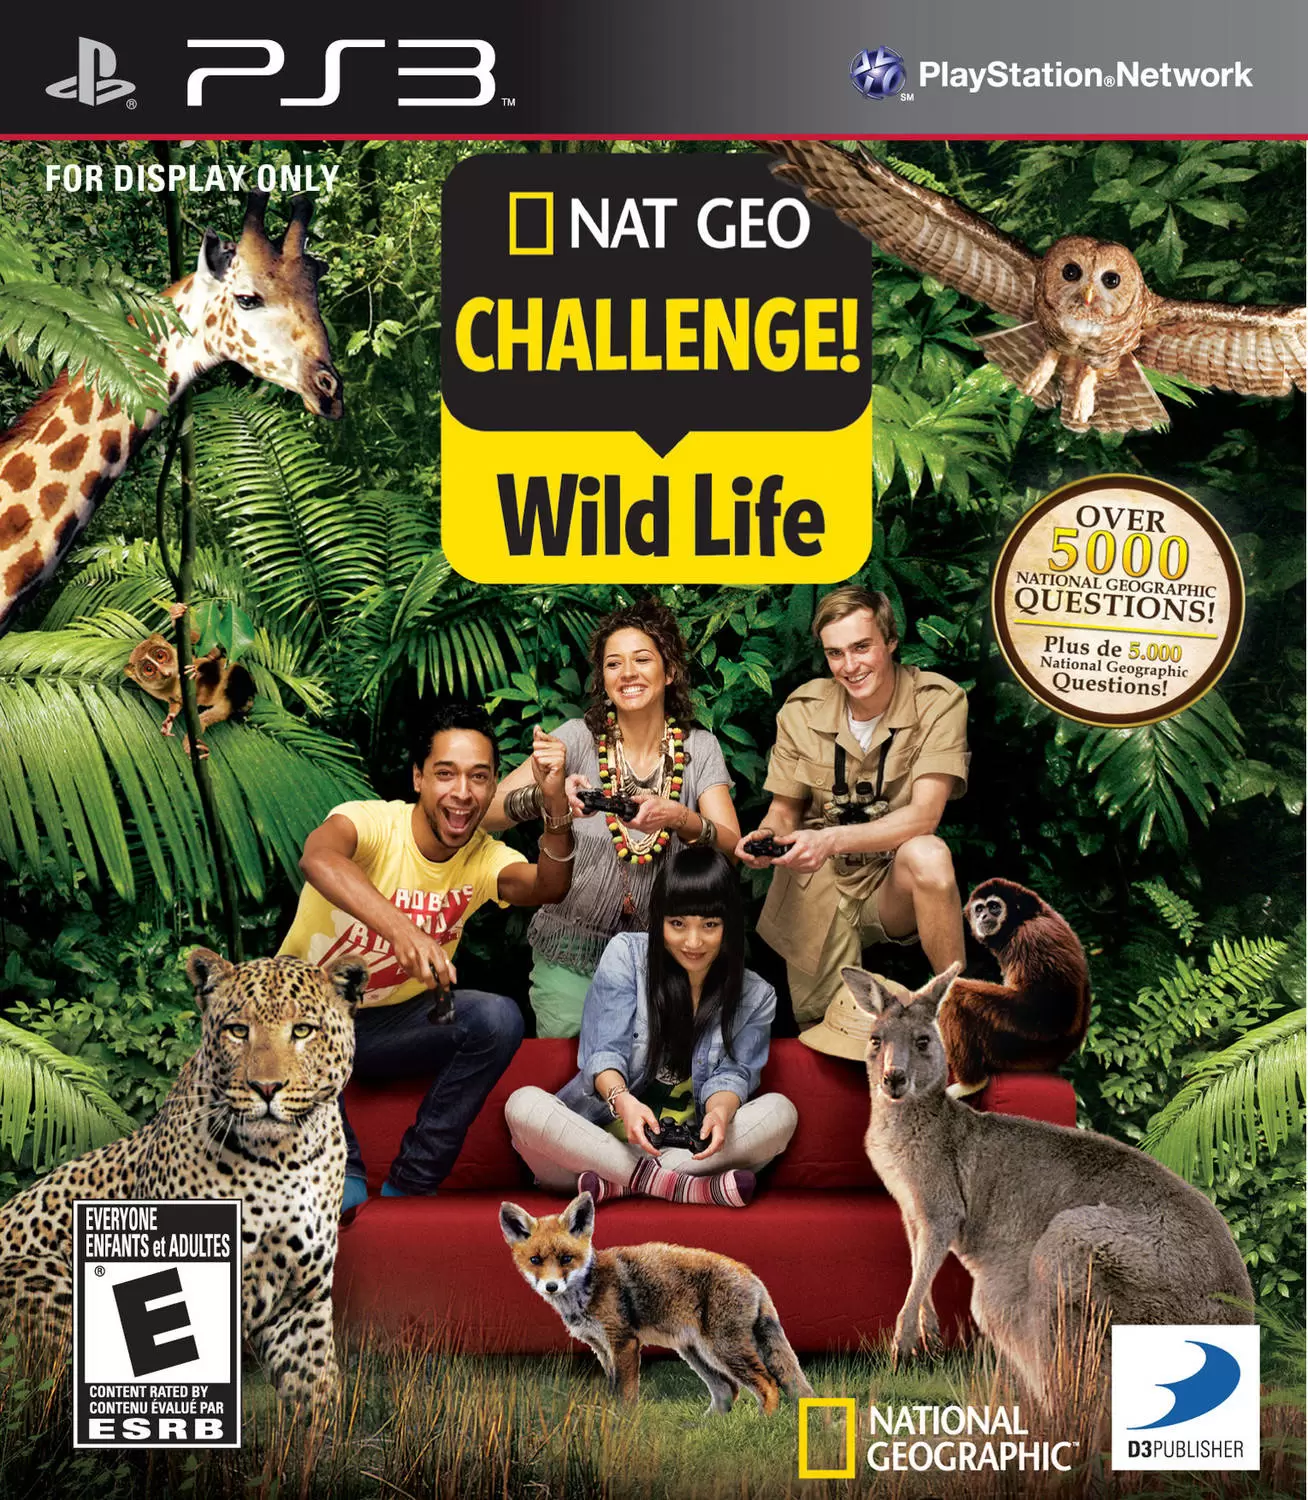 Jeux PS3 - Nat Geo Challenge! Wild Life